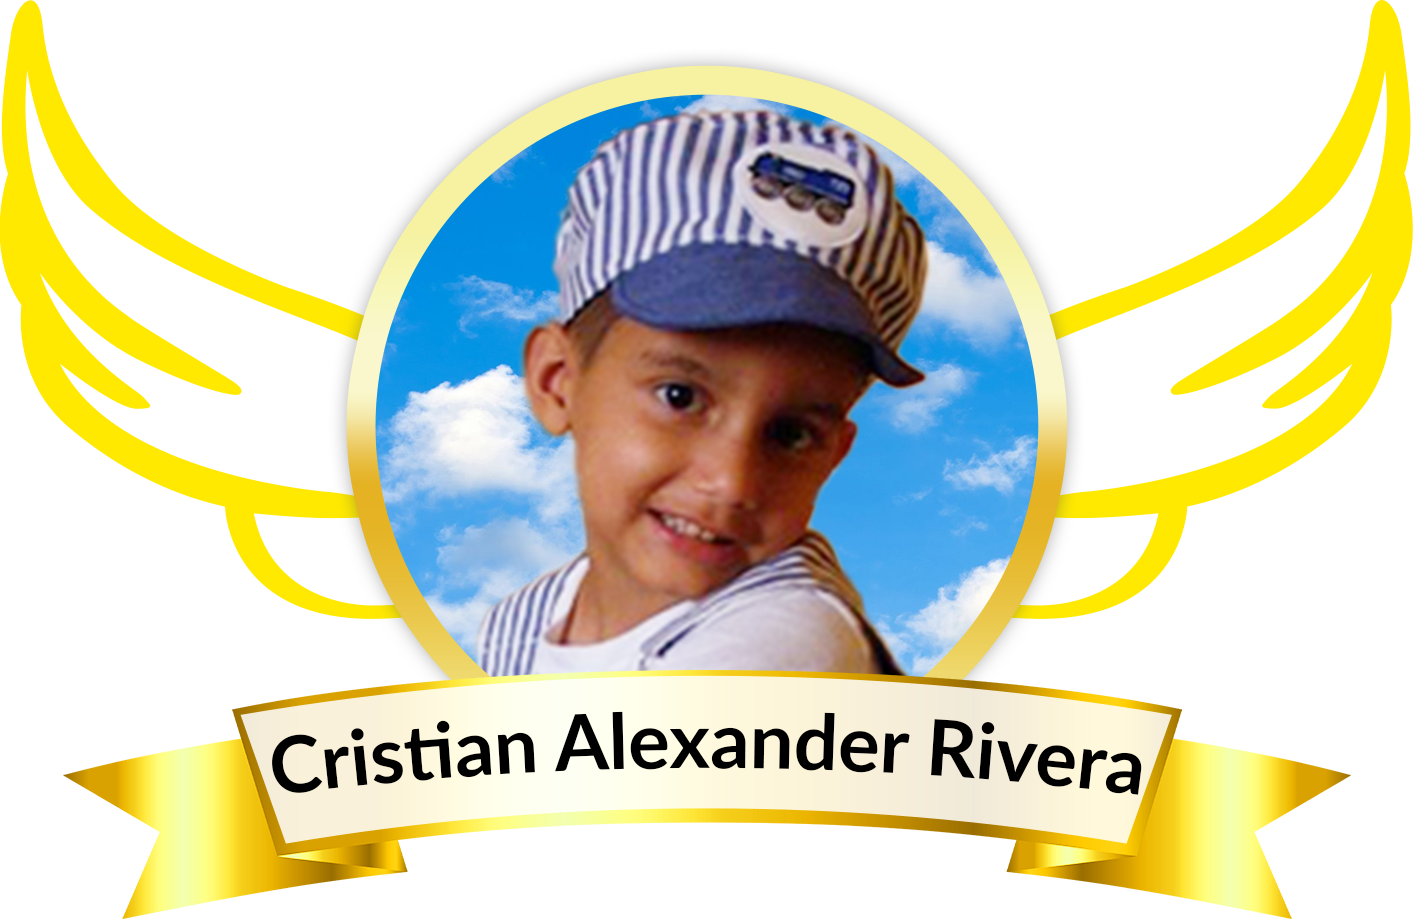 Cristian Alexander Rivera